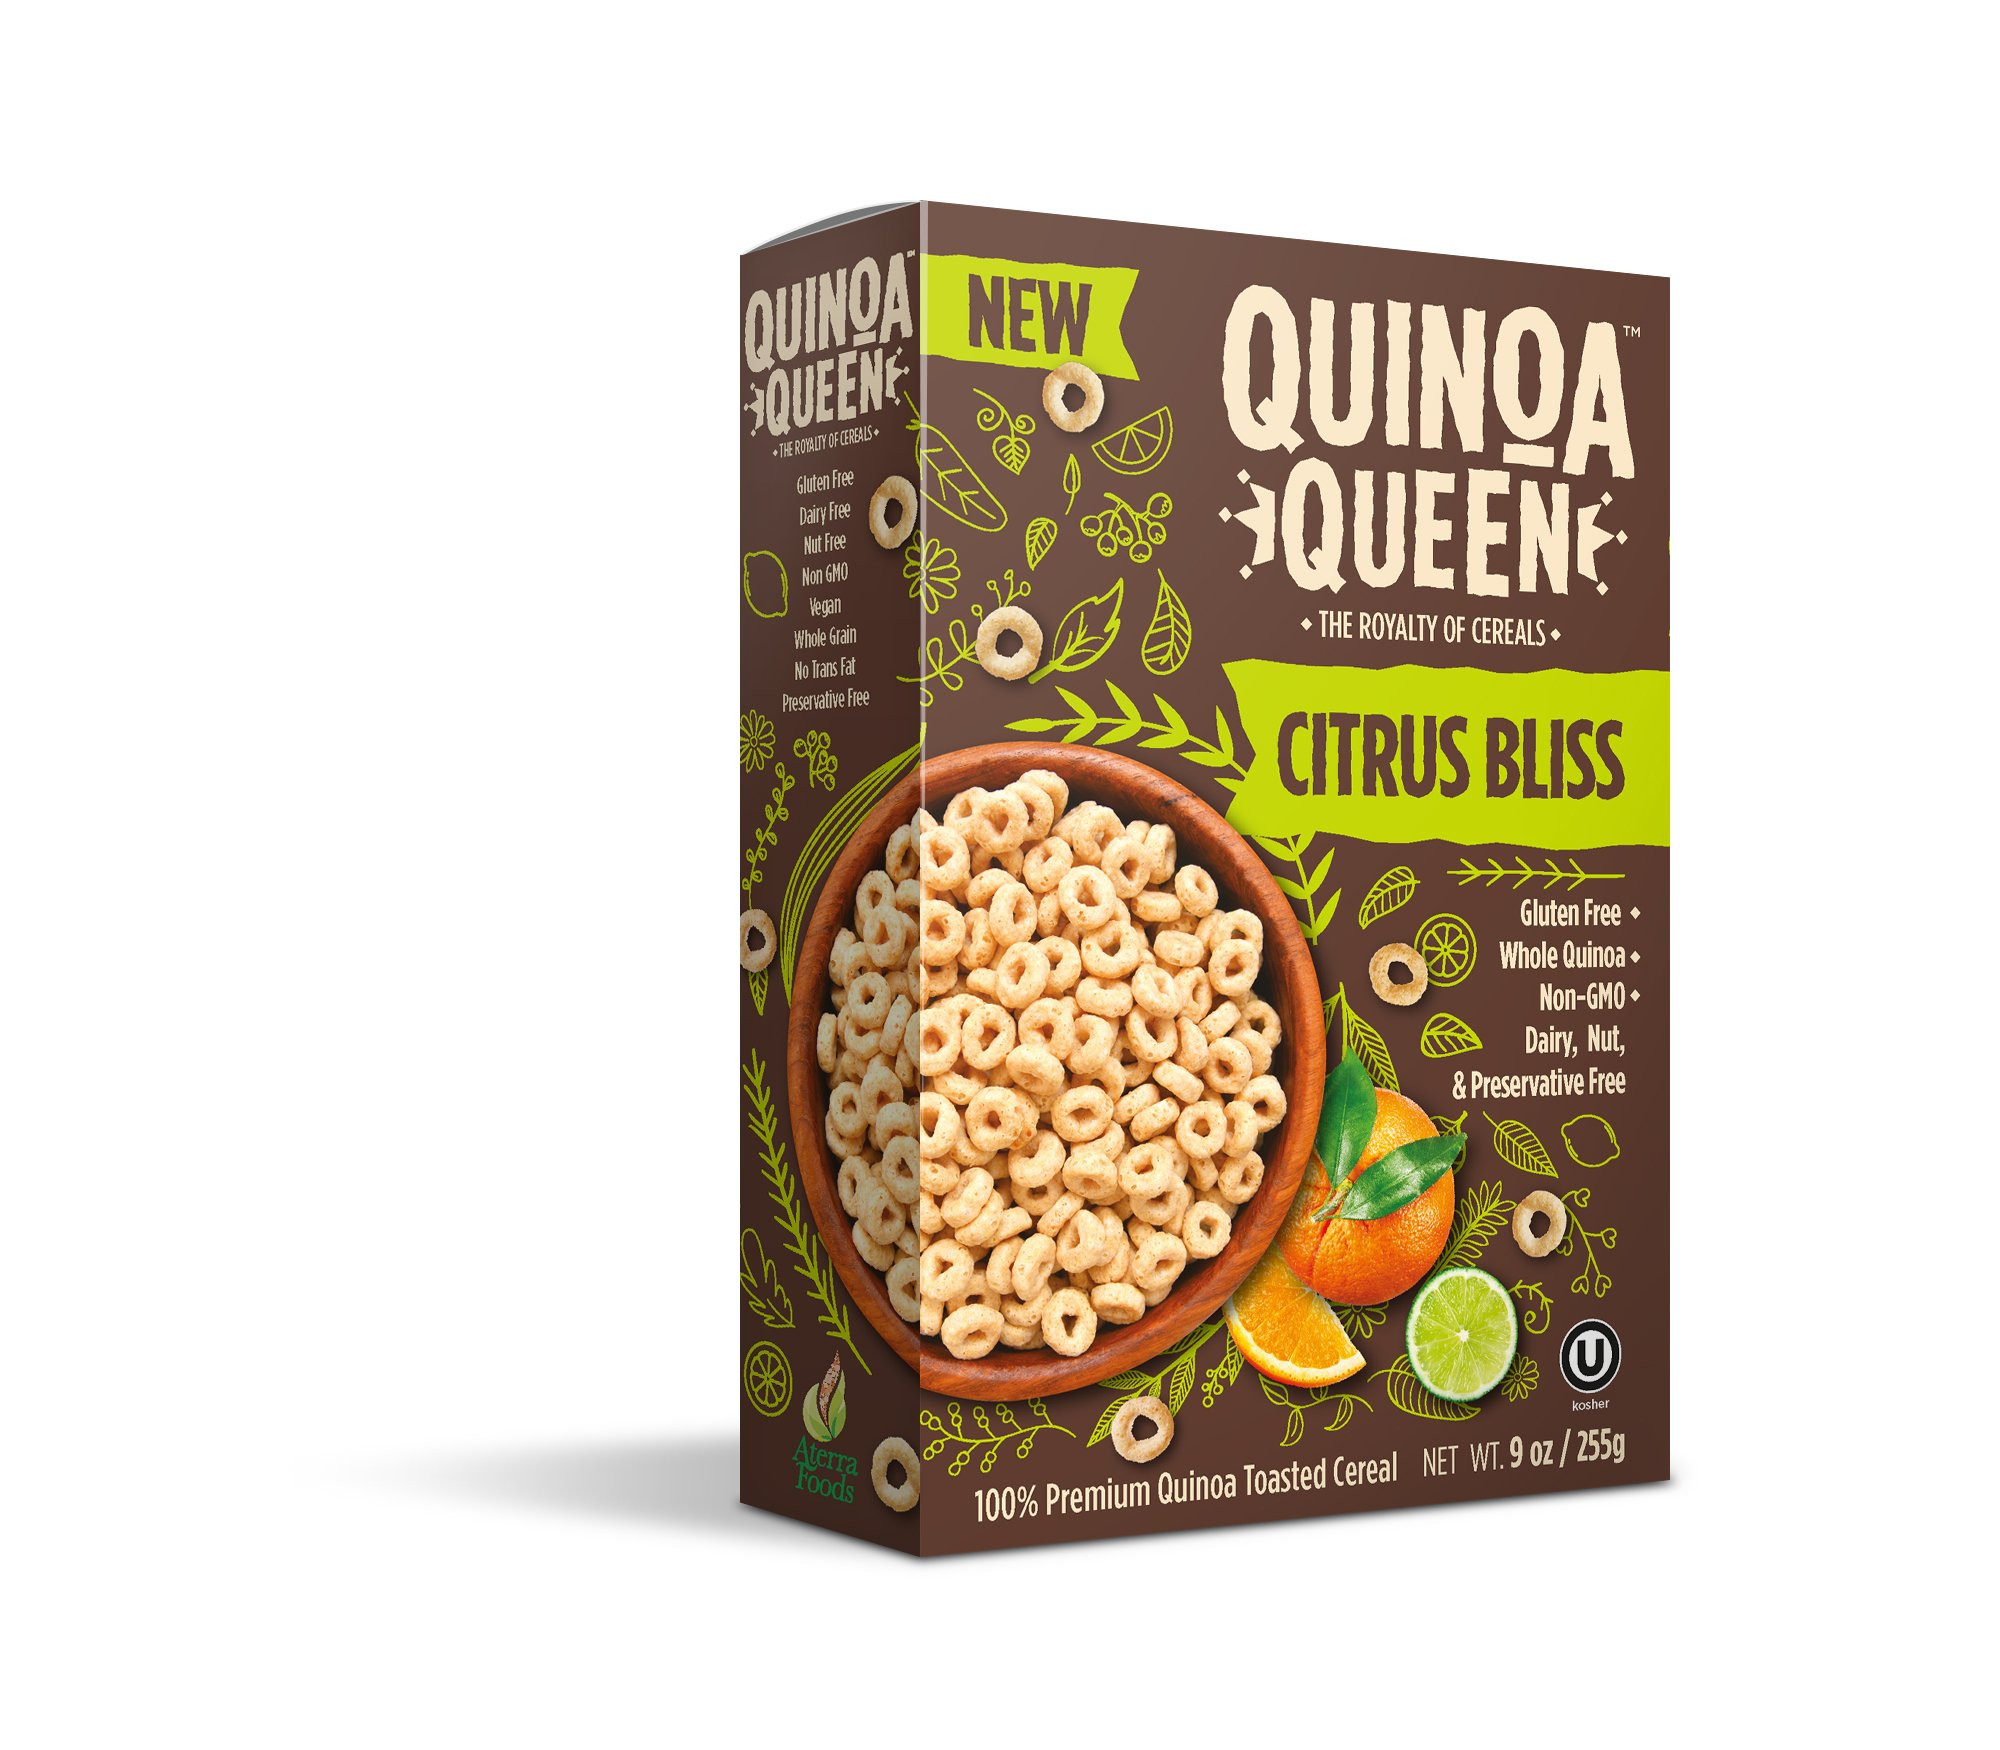 Quinoa Breakfast Cereal
 Amazon Quinoa Queen Cereal Pack of 4 Original